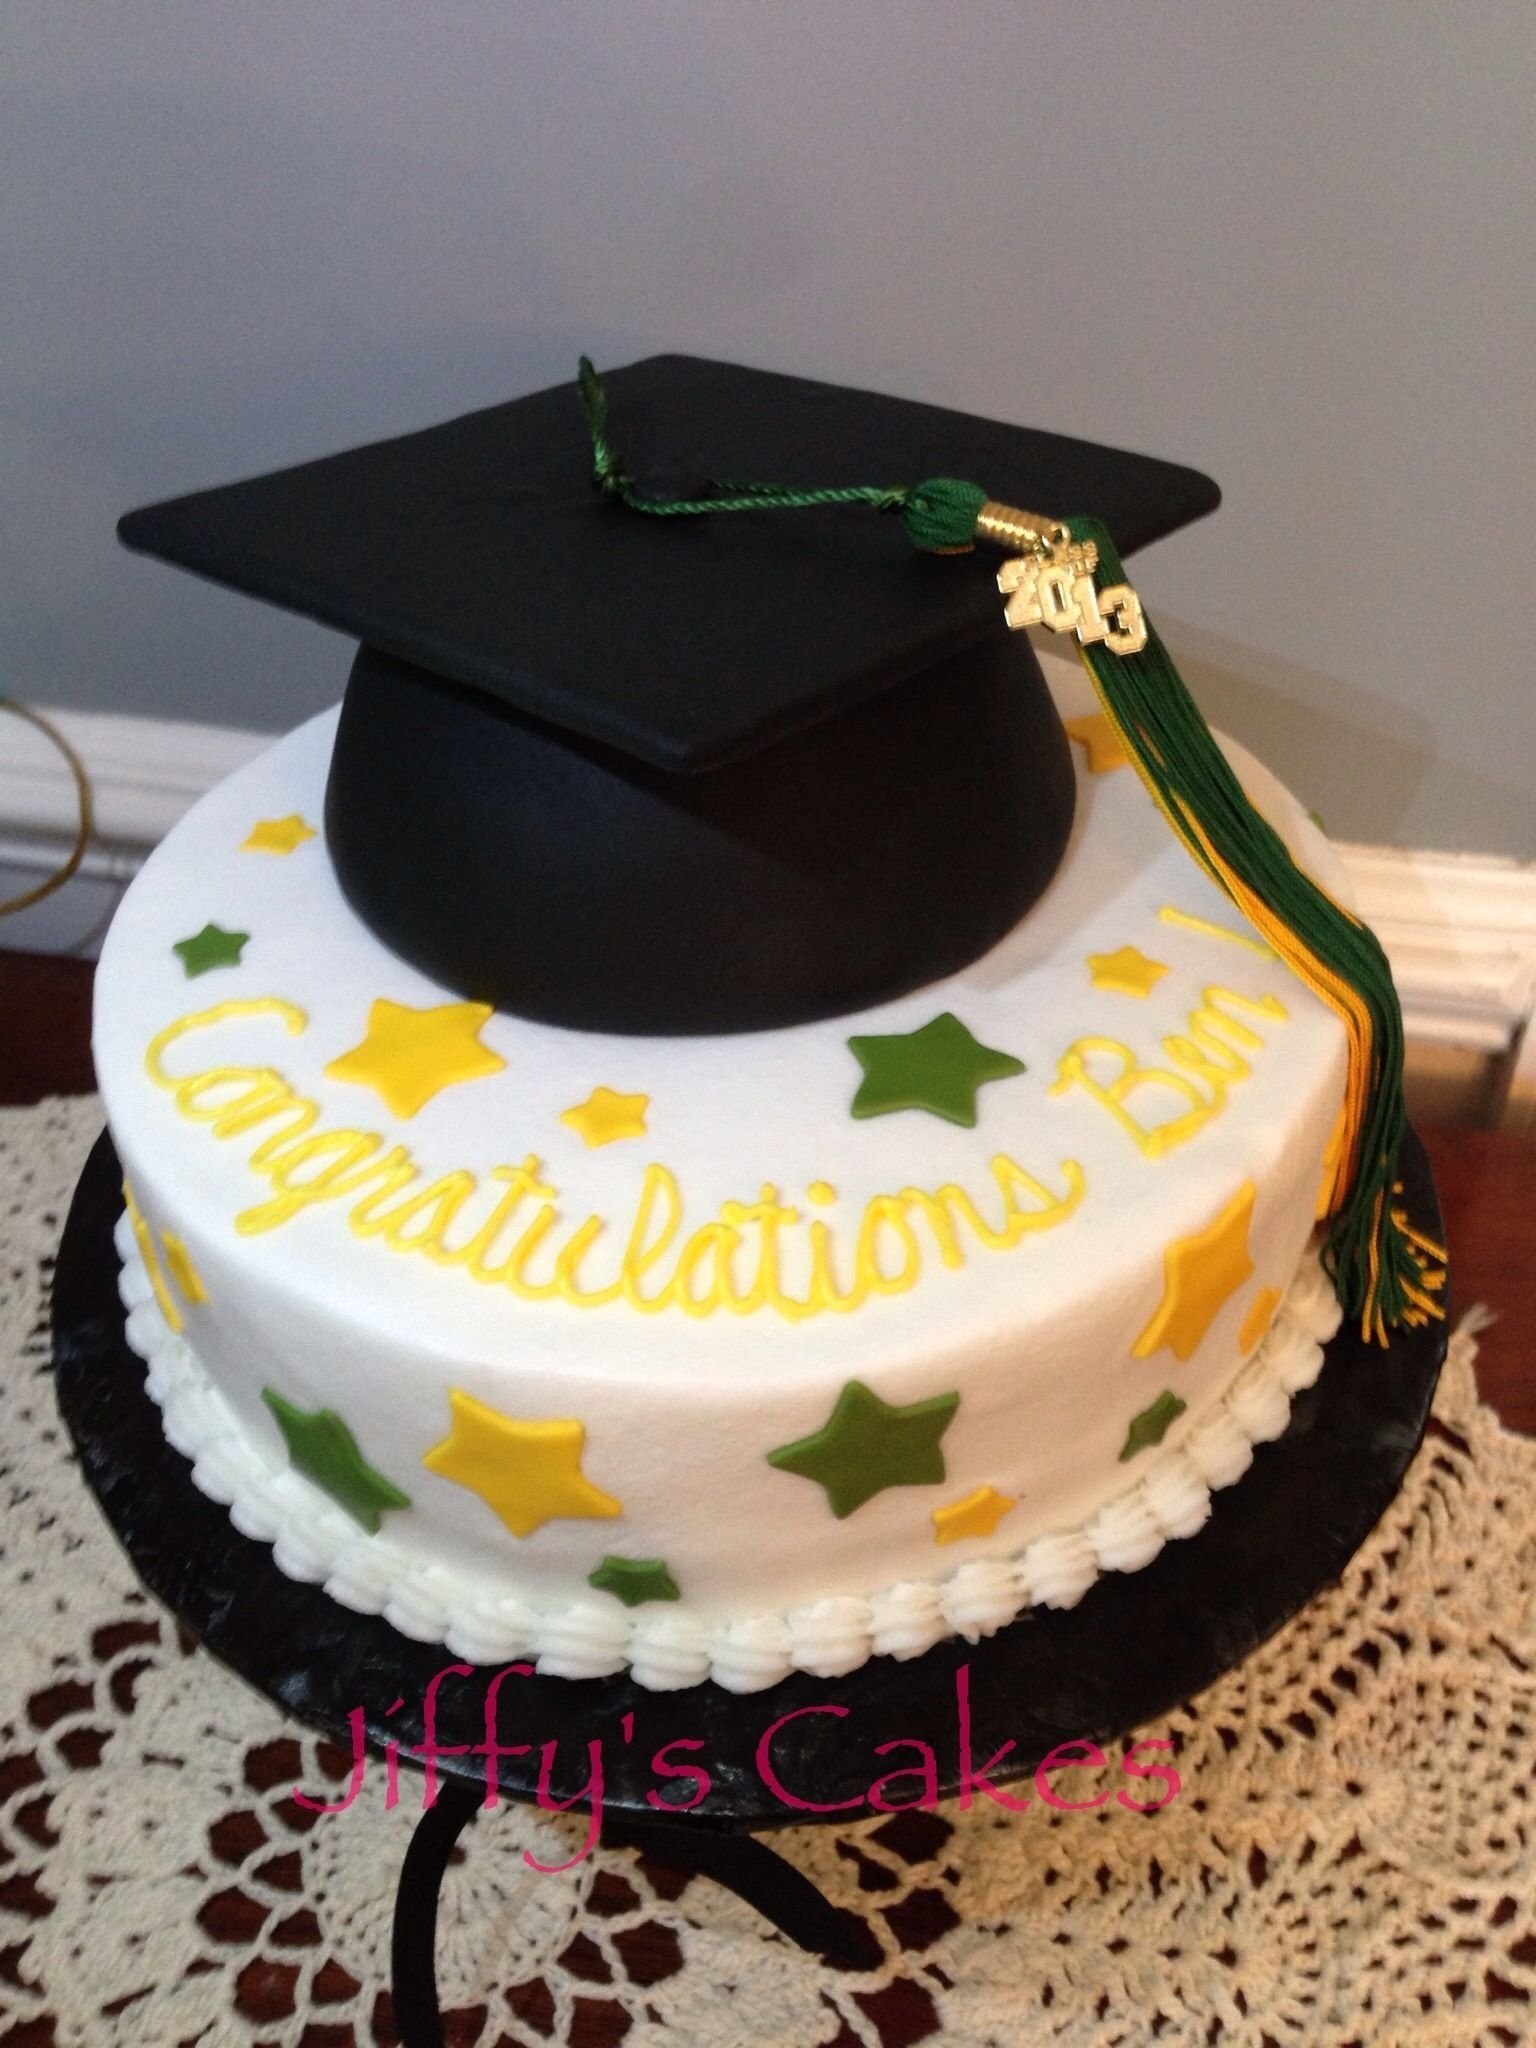 10 Nice Graduation Cake Ideas For Guys graduation cake my cakes pinterest cake graduation ideas and 2022